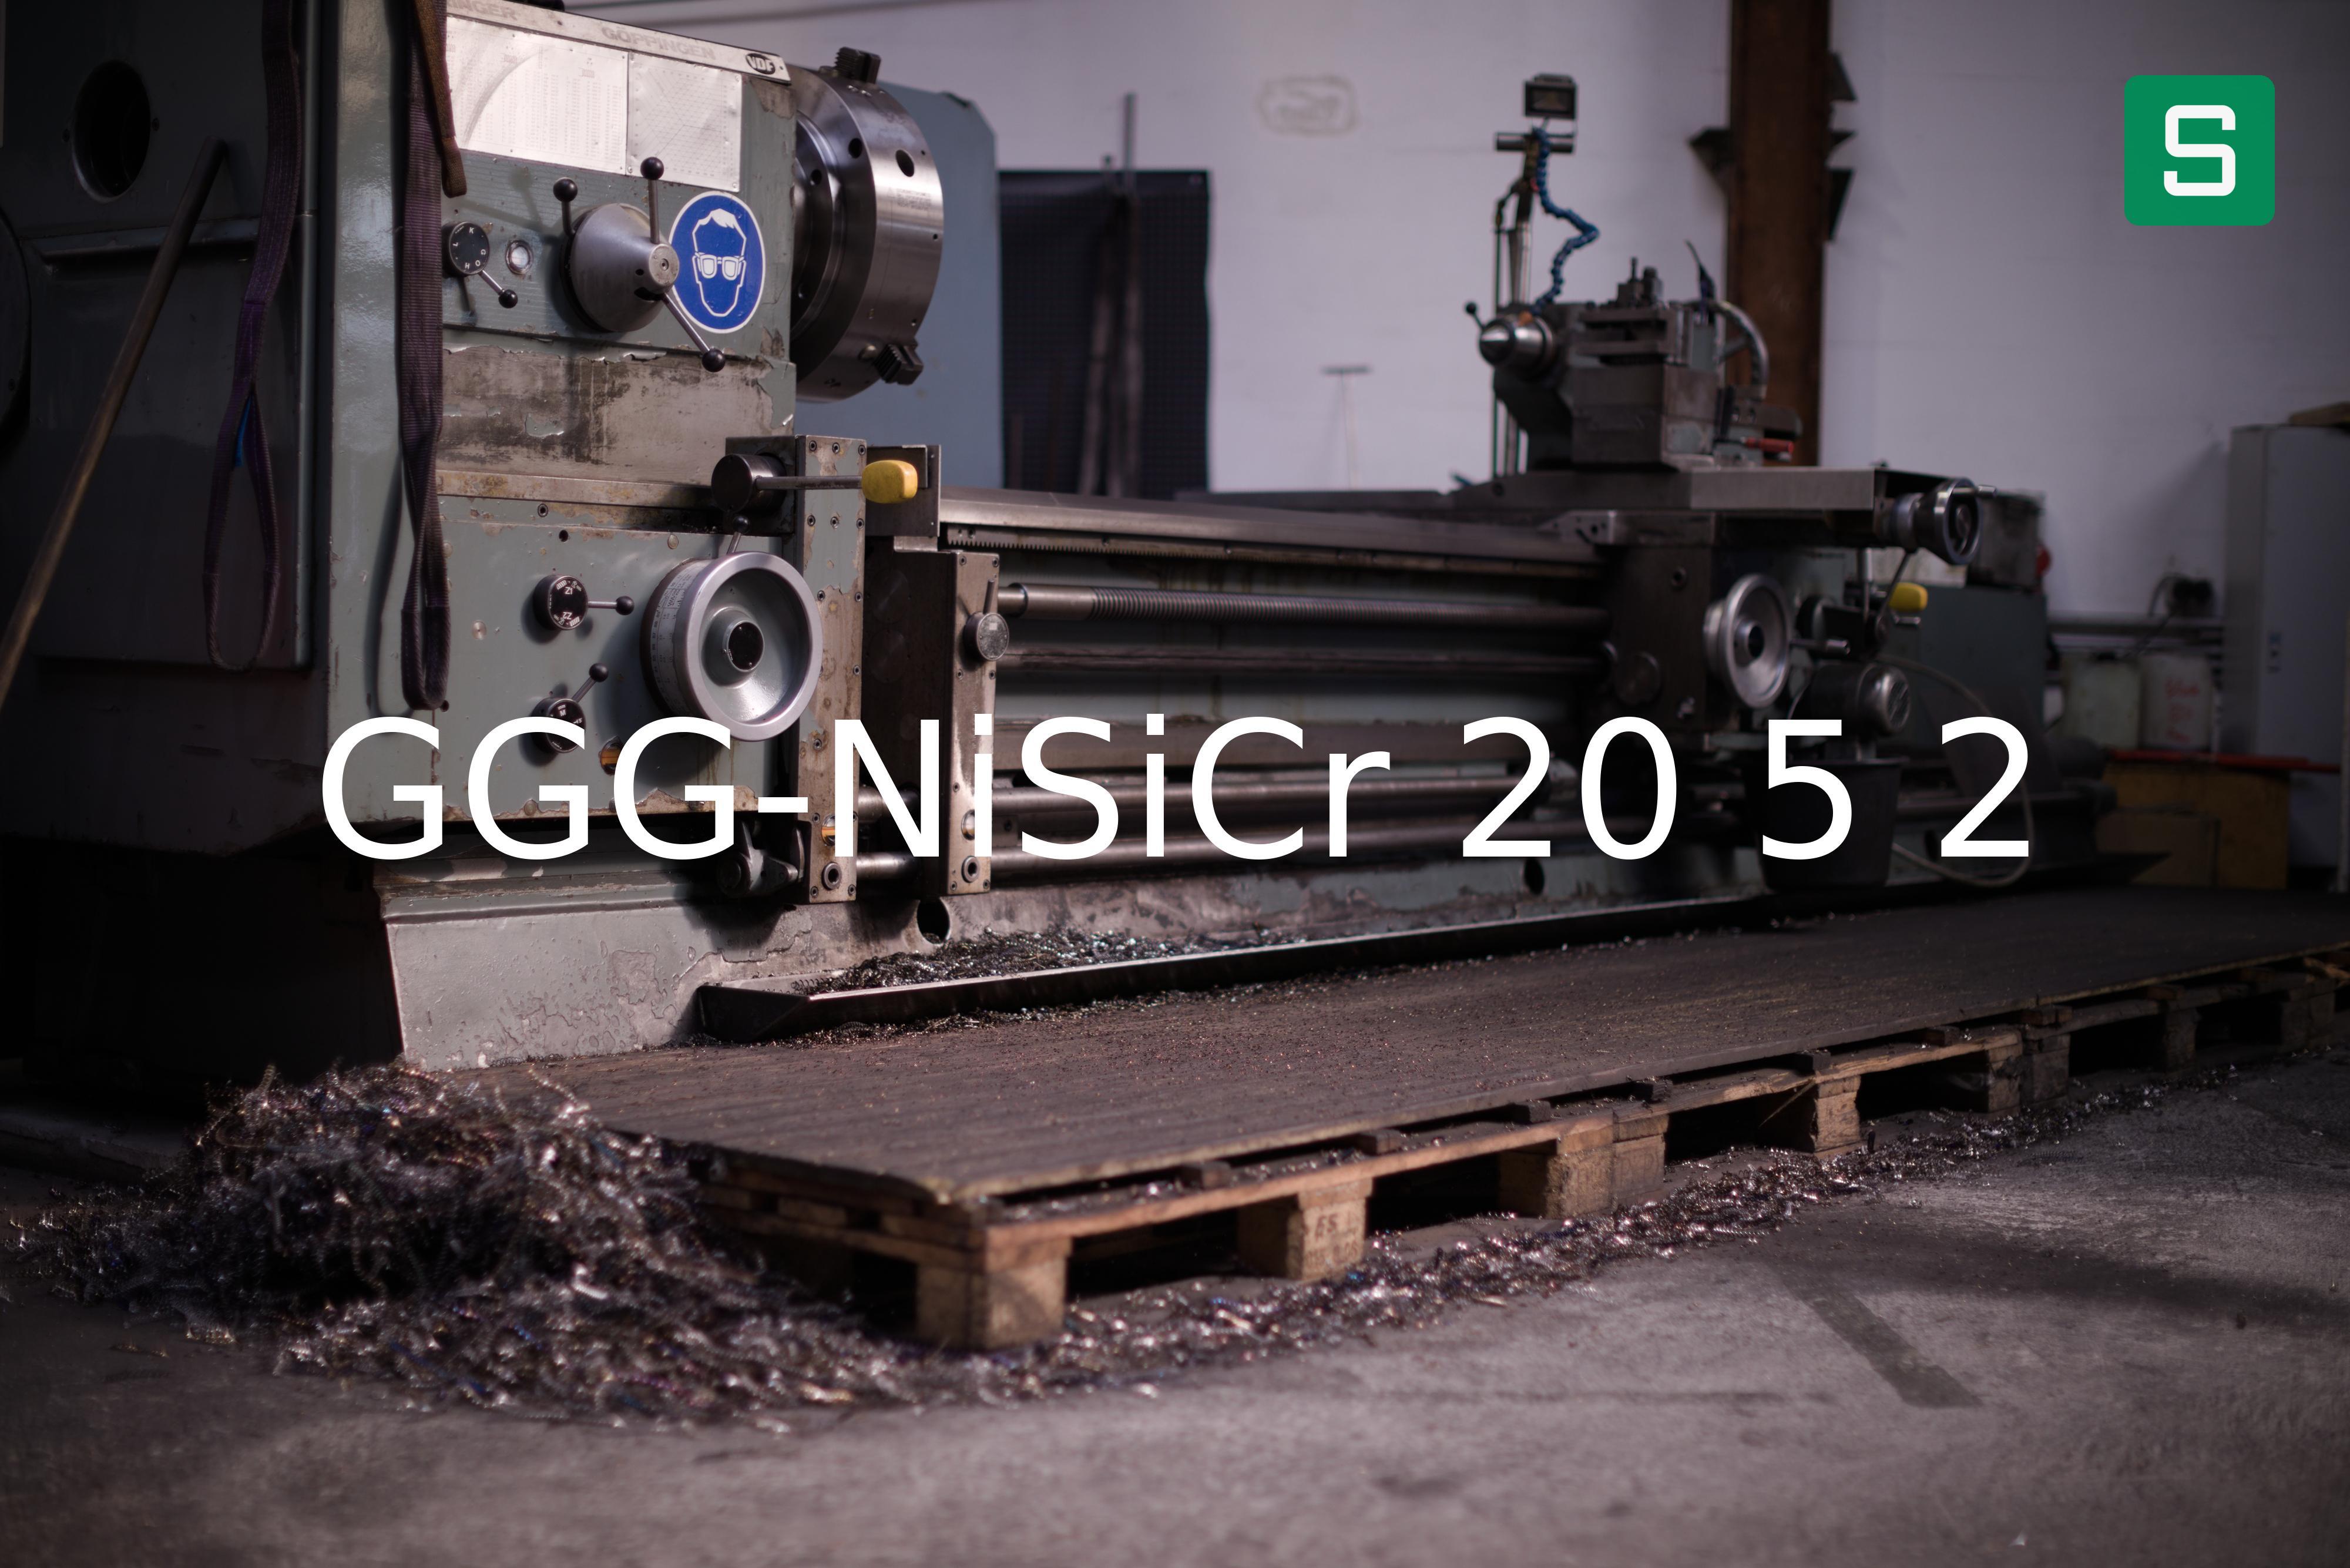 Stahlwerkstoff: GGG-NiSiCr 20 5 2